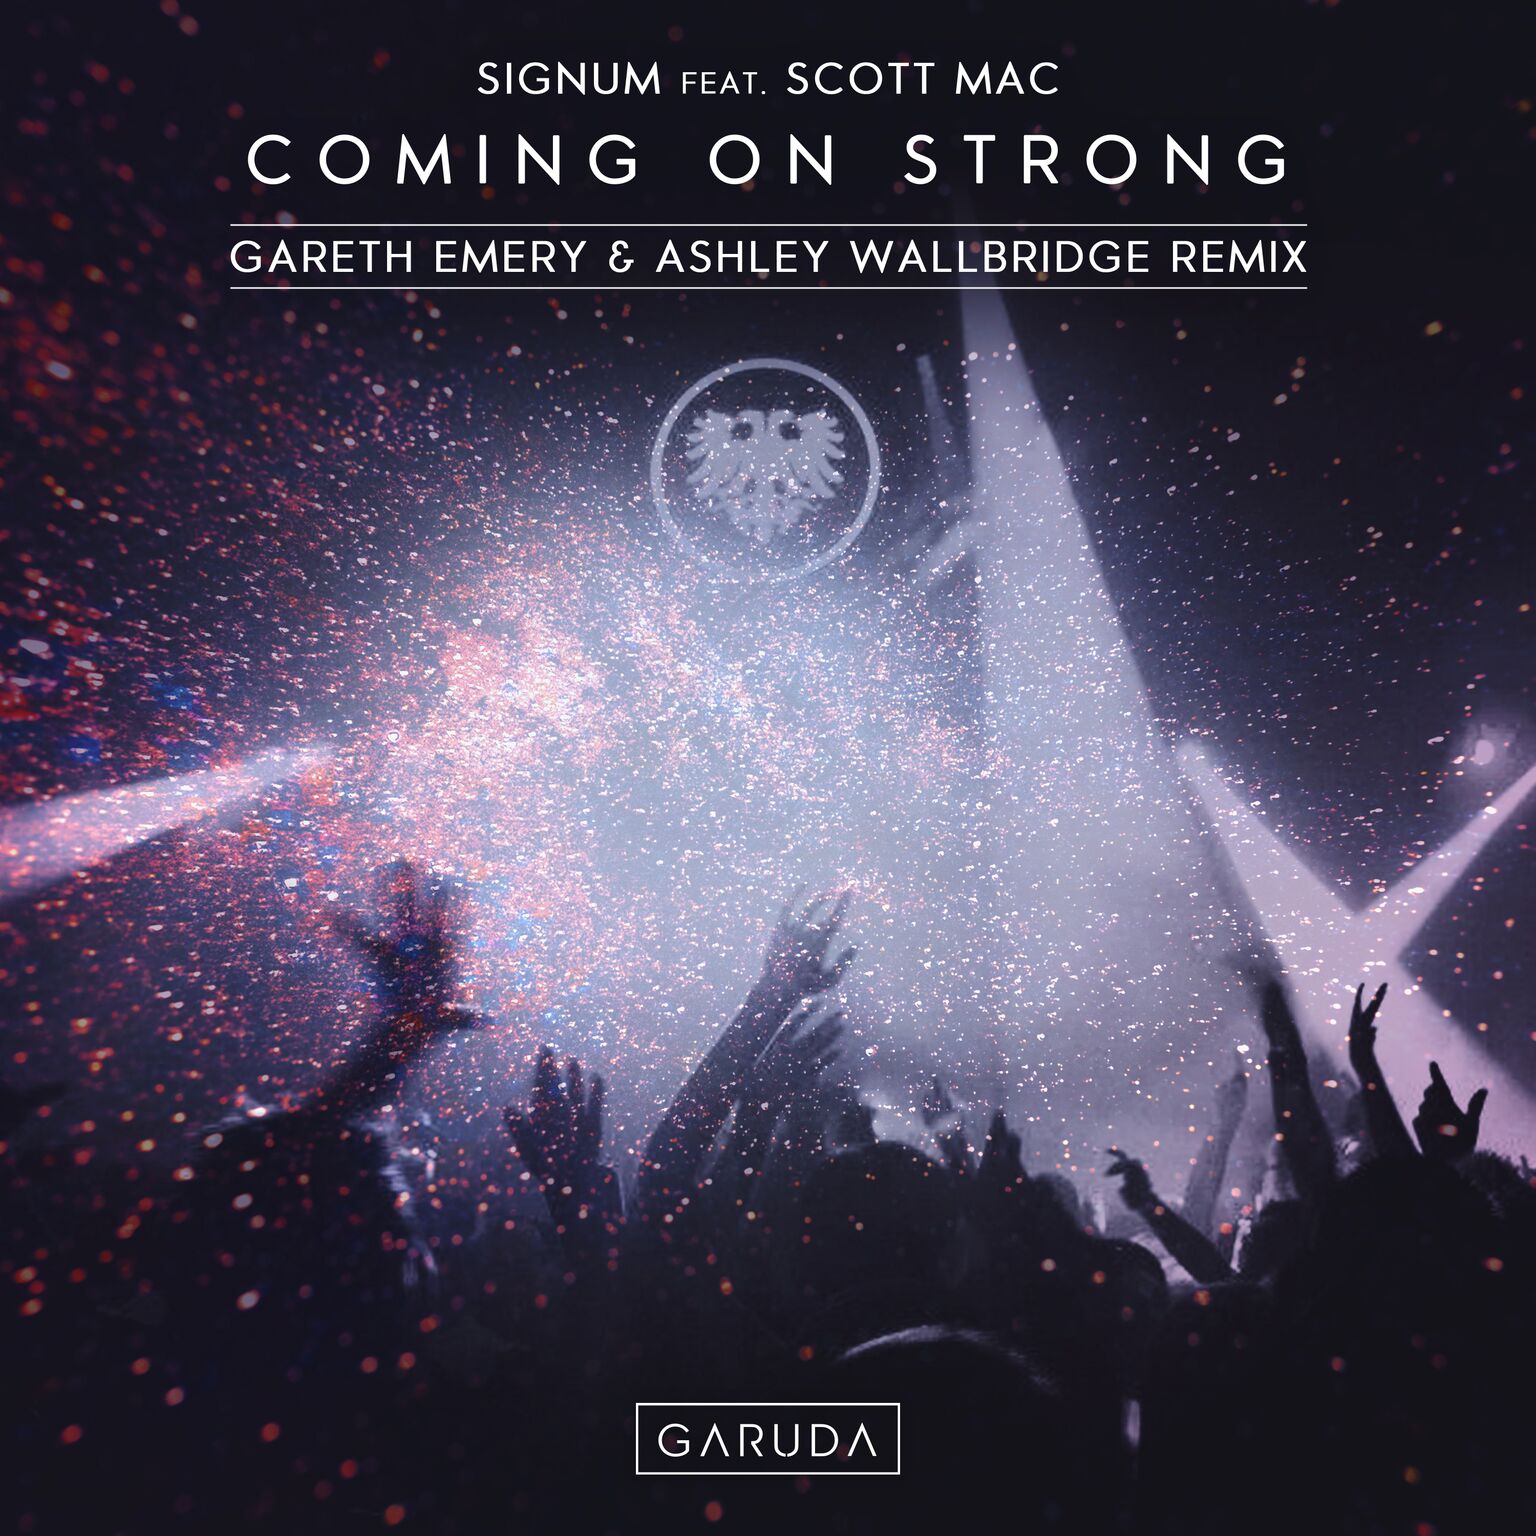 Signum feat. Scott Mac - Coming on Strong (Gareth Emery & Ashley Wallbridge Remix)